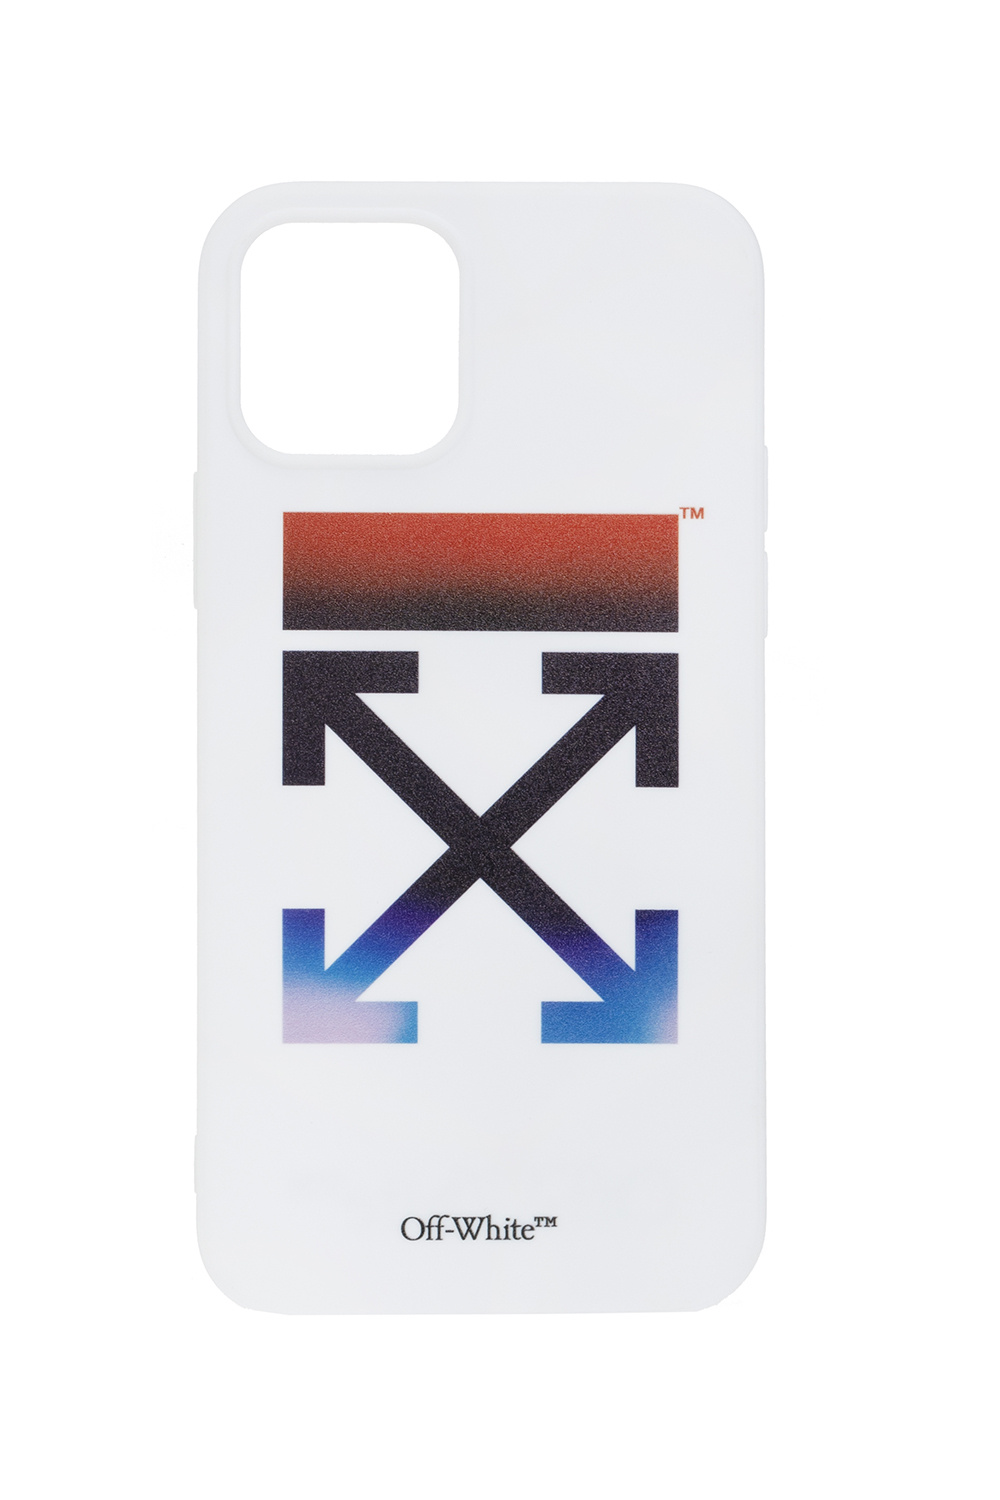 Off-White iPhone 12 Pro Max case